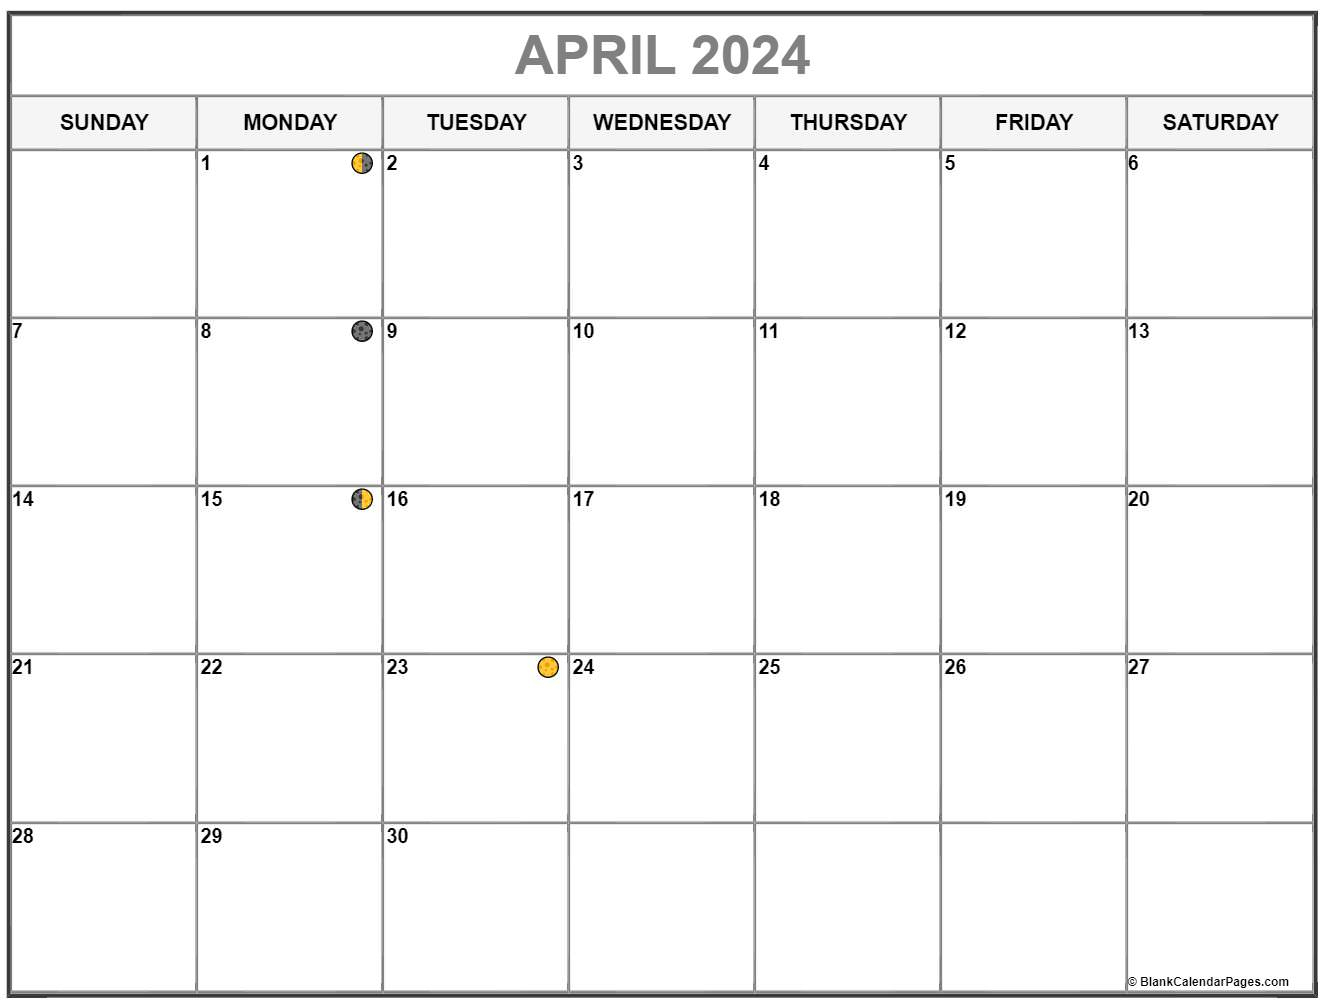 April 2024 Lunar Calendar | Moon Phase Calendar in Moon Phase Calendar April 2024